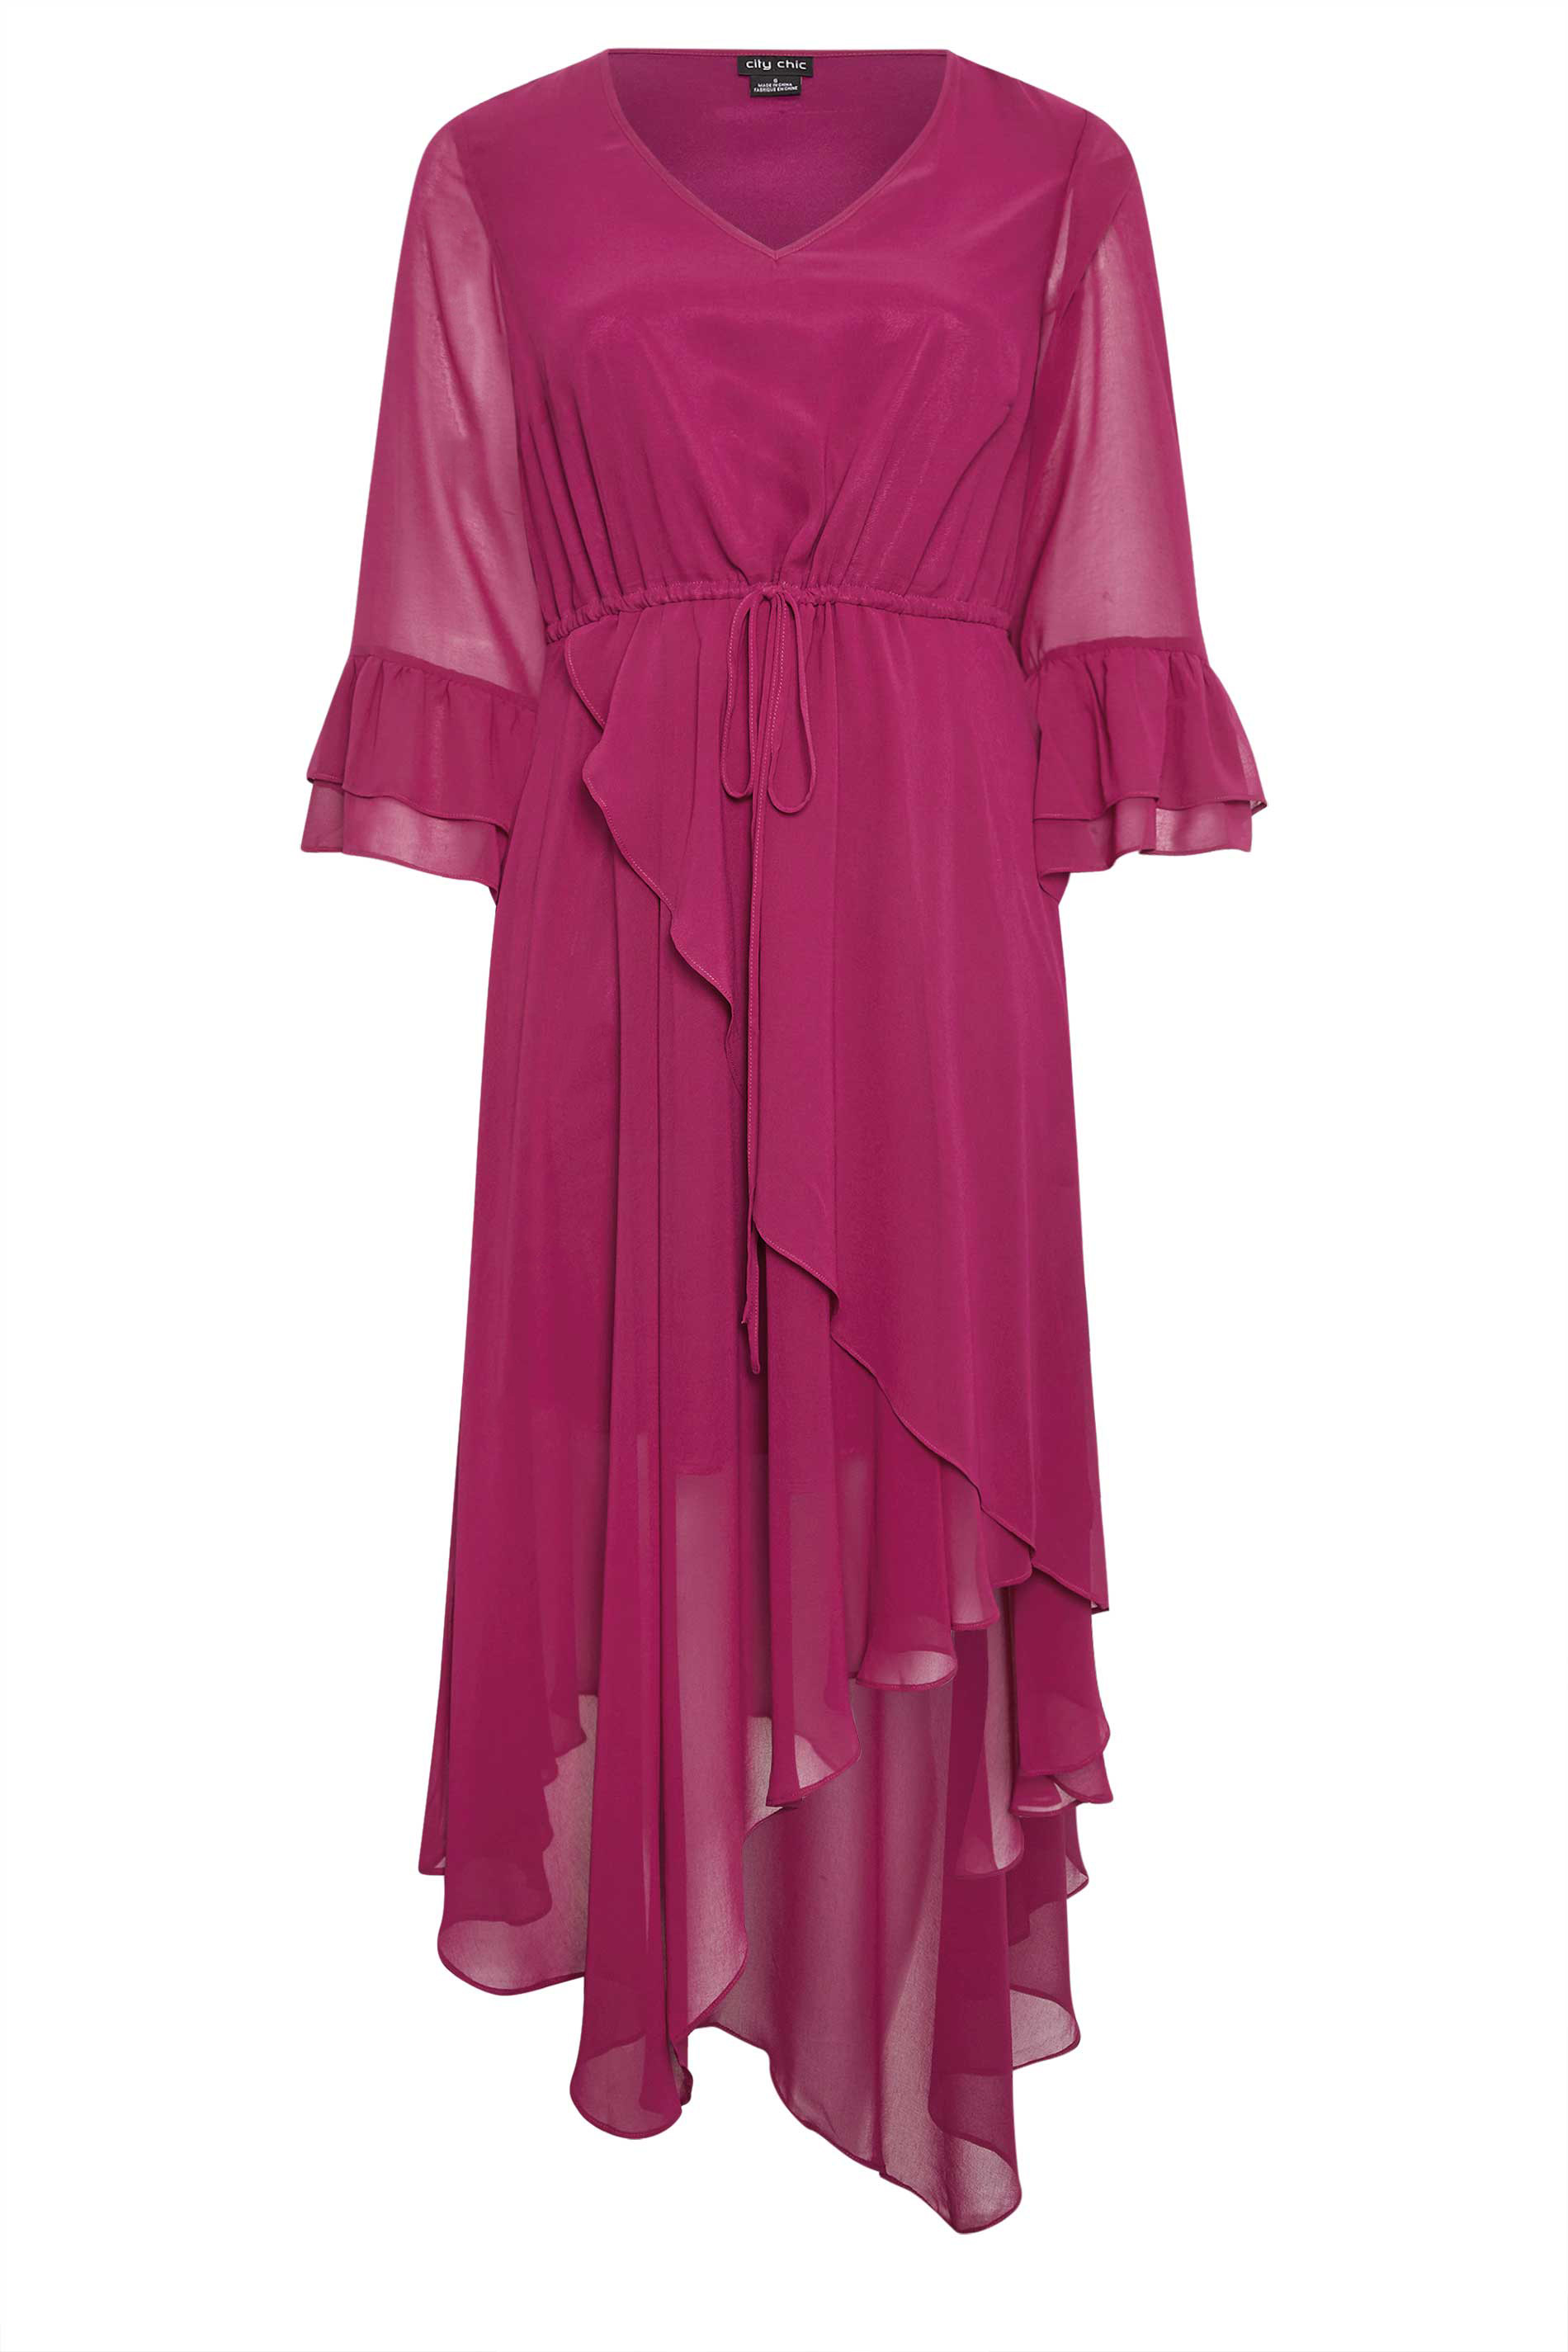 Evans Berry Pink Layered Chiffon Maxi Dress | Evans